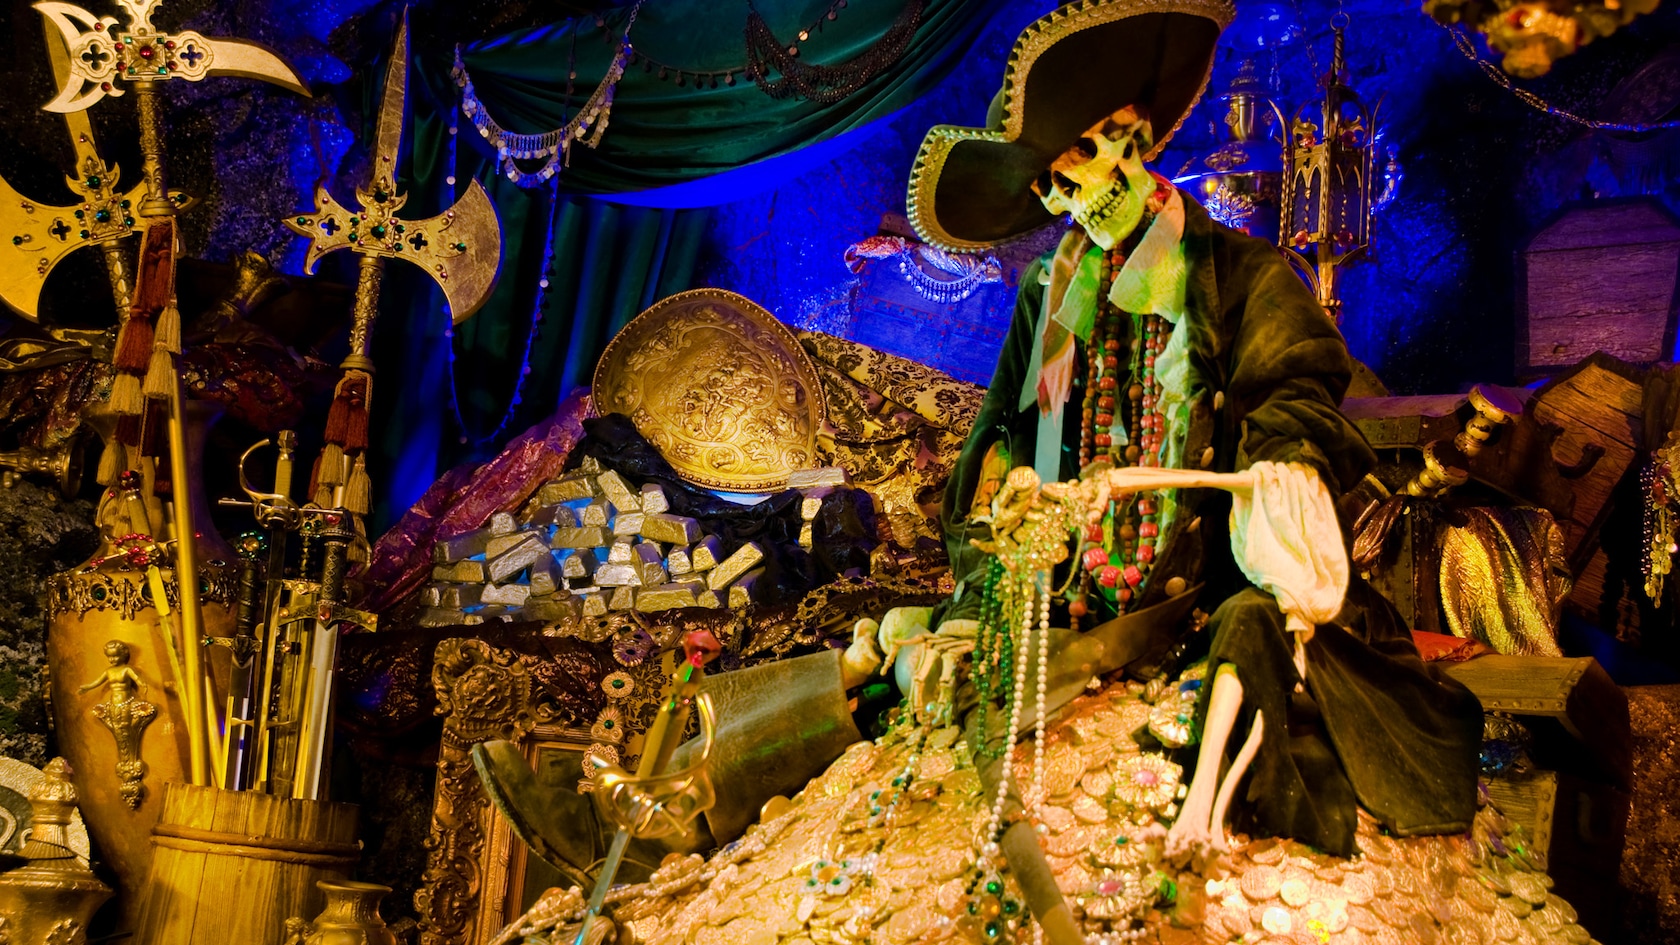 Pirates of the Caribbean, Disneyland Resort/Disney